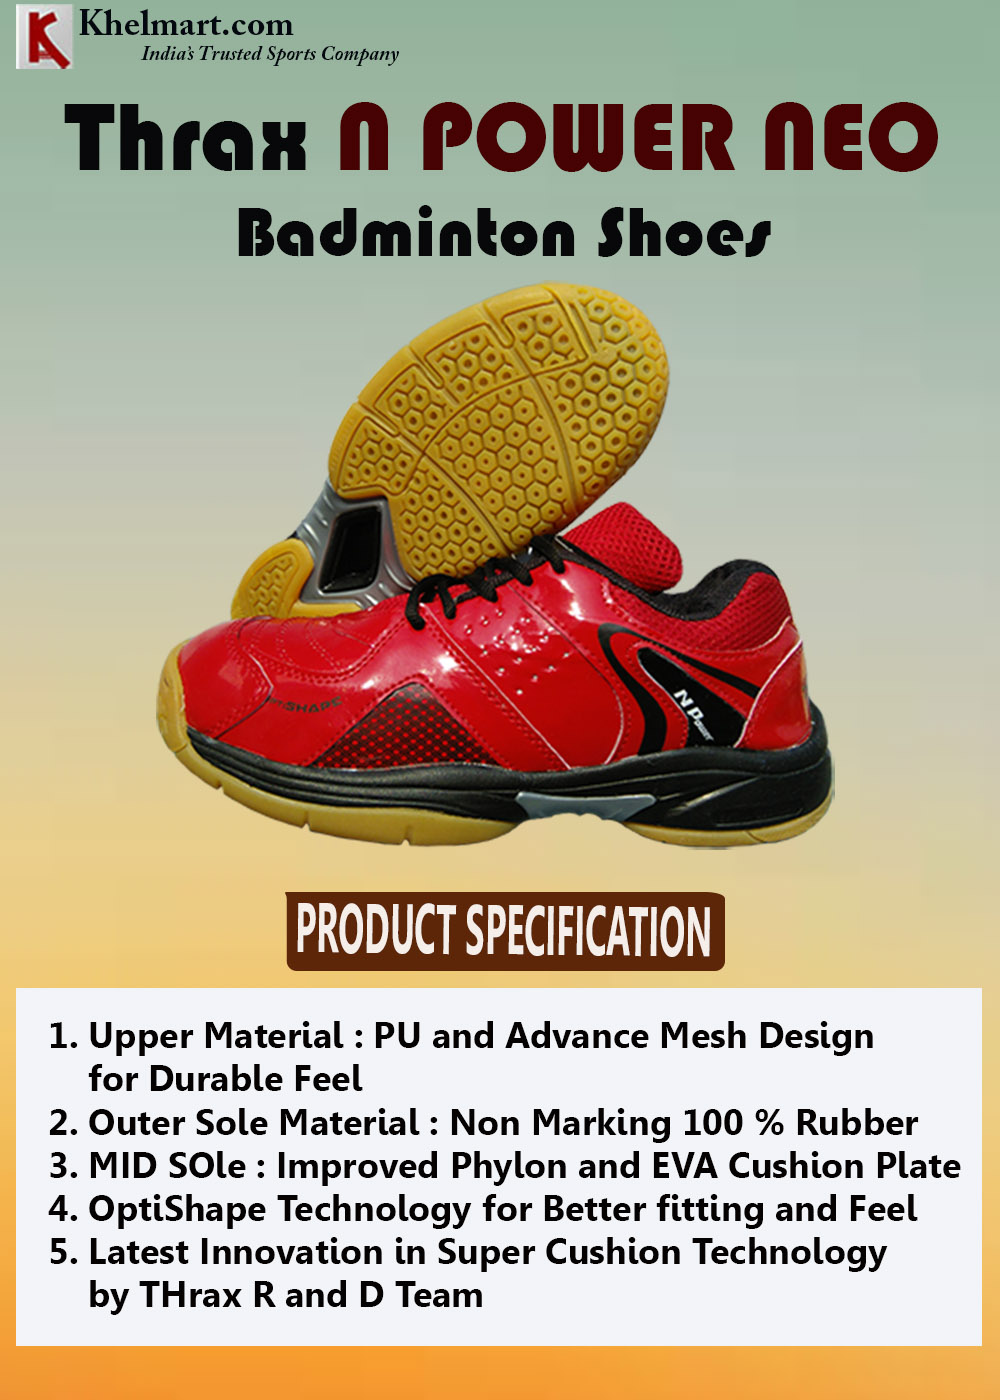 Most Expensive Badminton Shoes 2018 